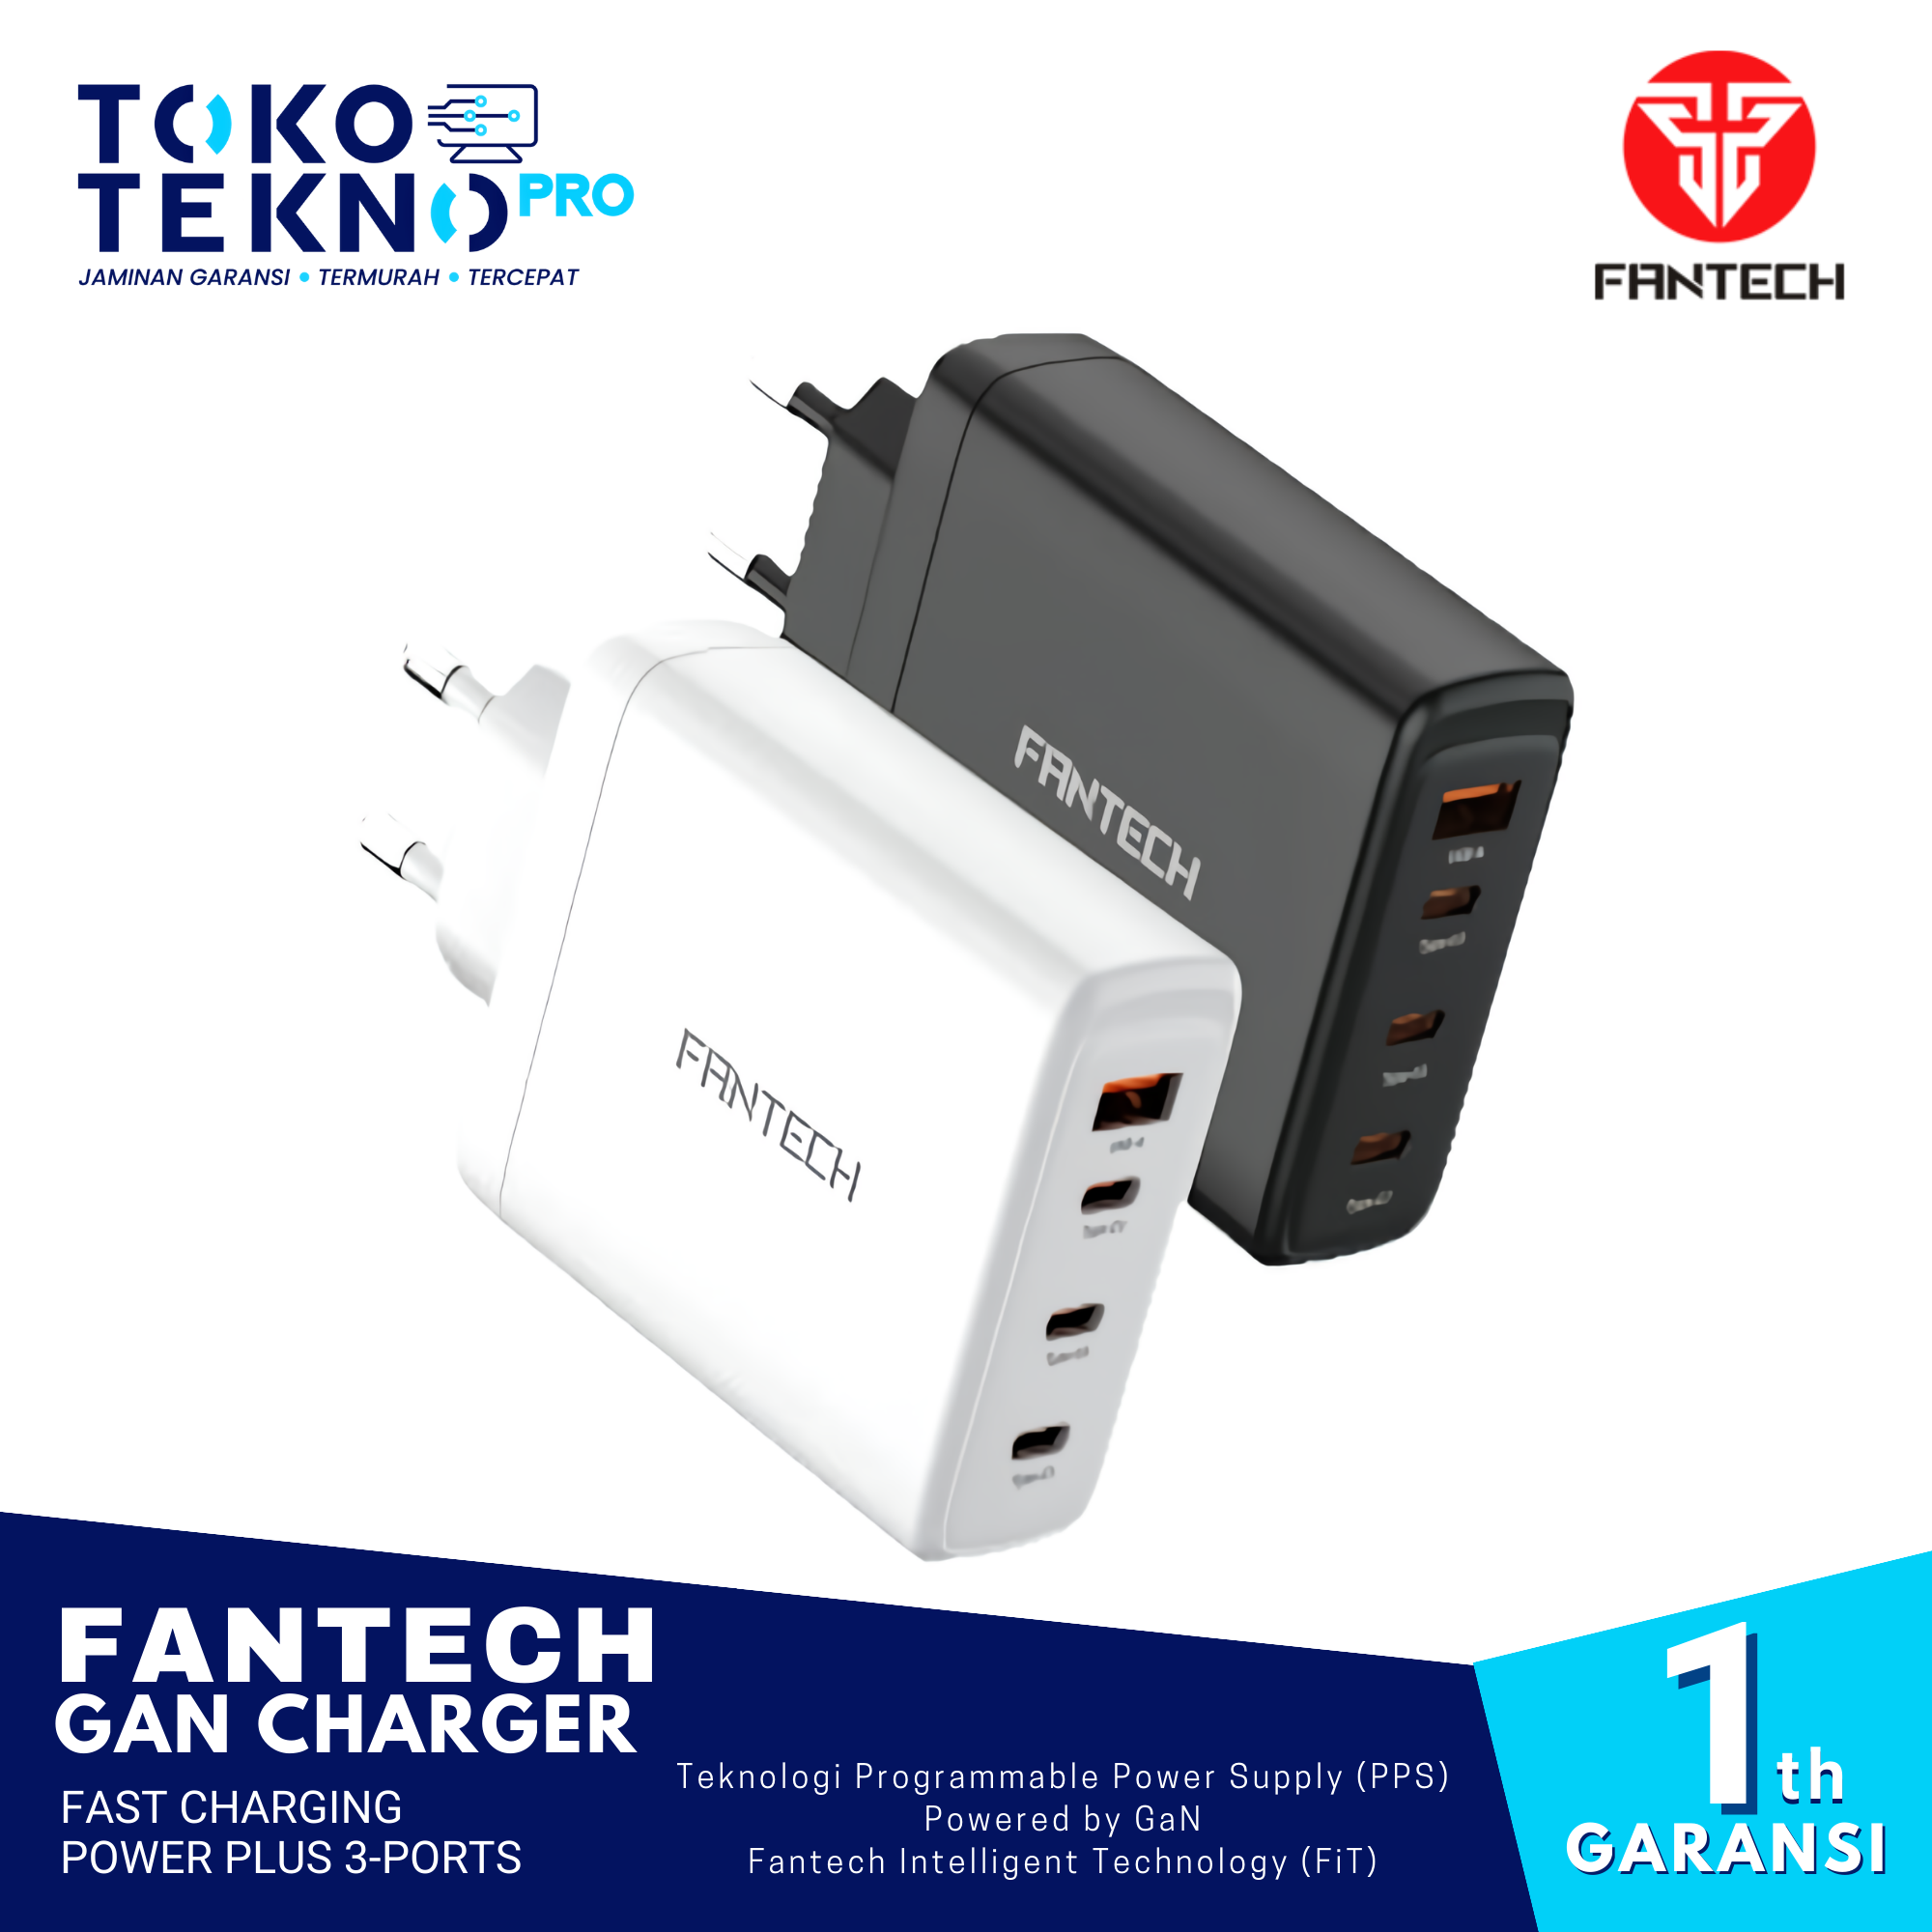 Fantech GaN Charger 140Watt CWG140301 Fast Charging Power Plus 3-Ports